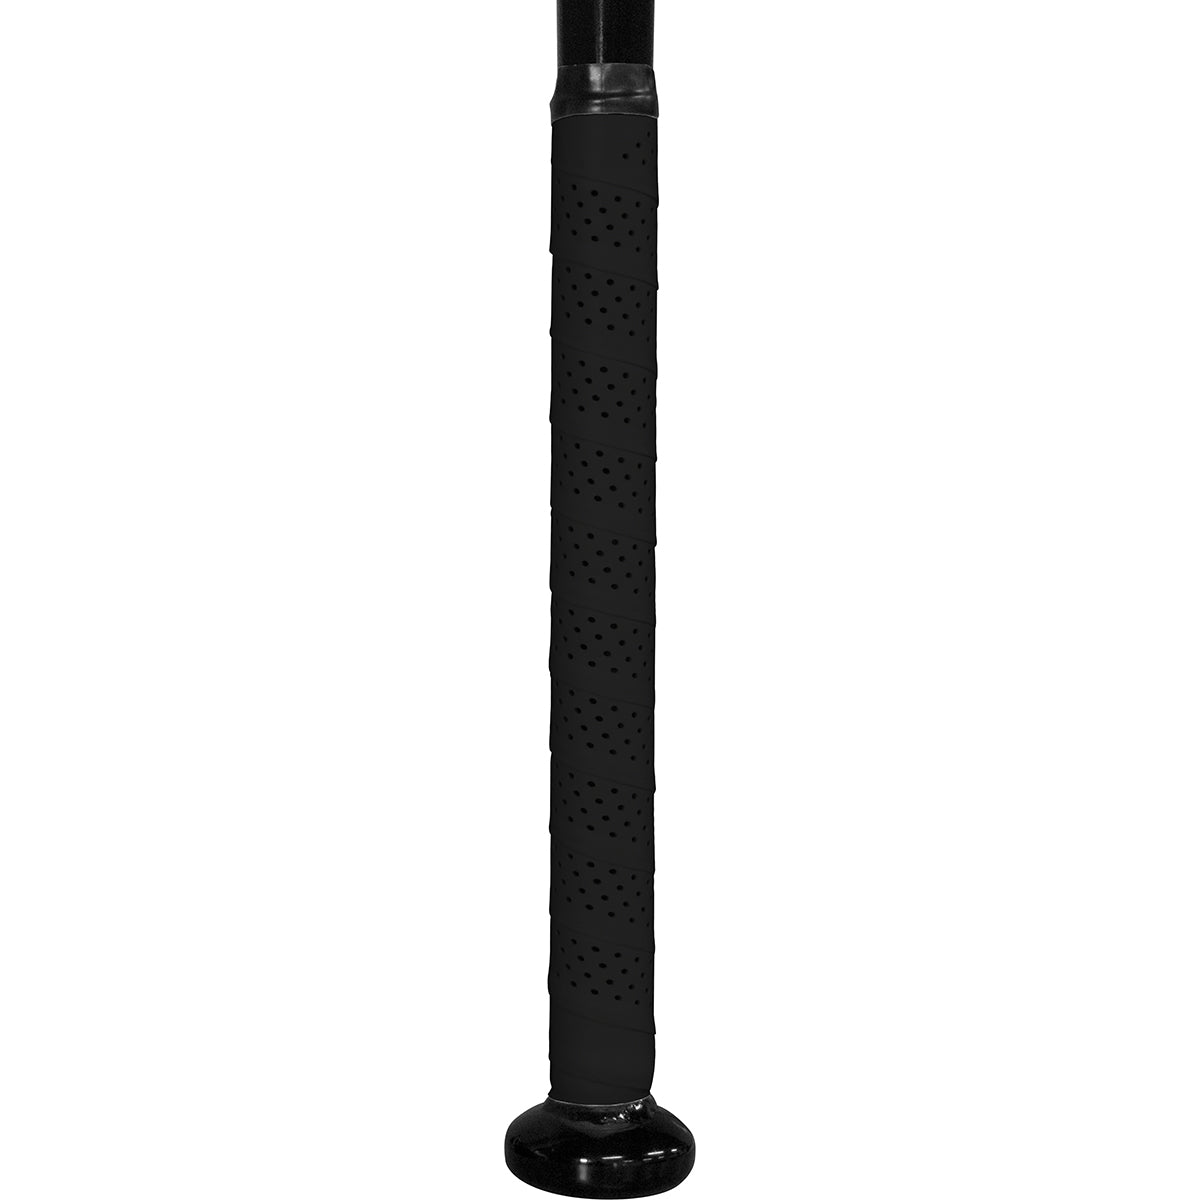 Rawlings 1.0mm Replacement Baseball Bat Grip Tape Rawlings